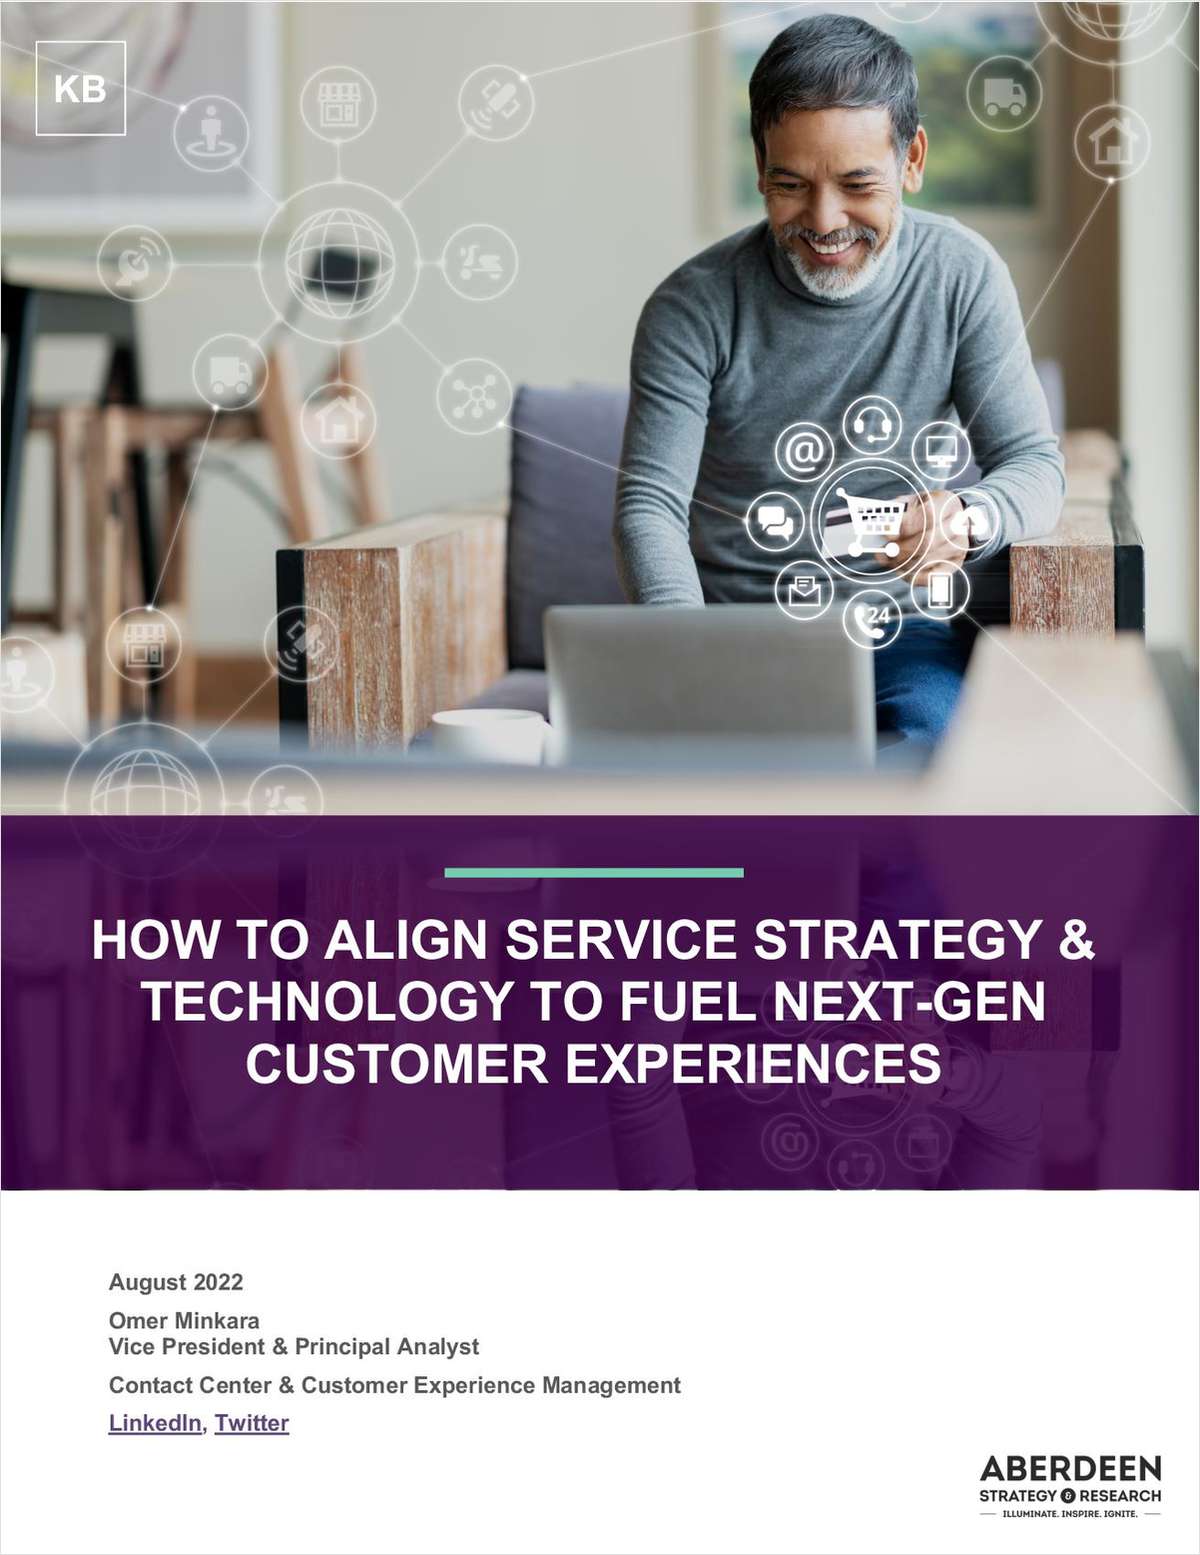 Aberdeen: Aligning Customer Service Strategy & Technology